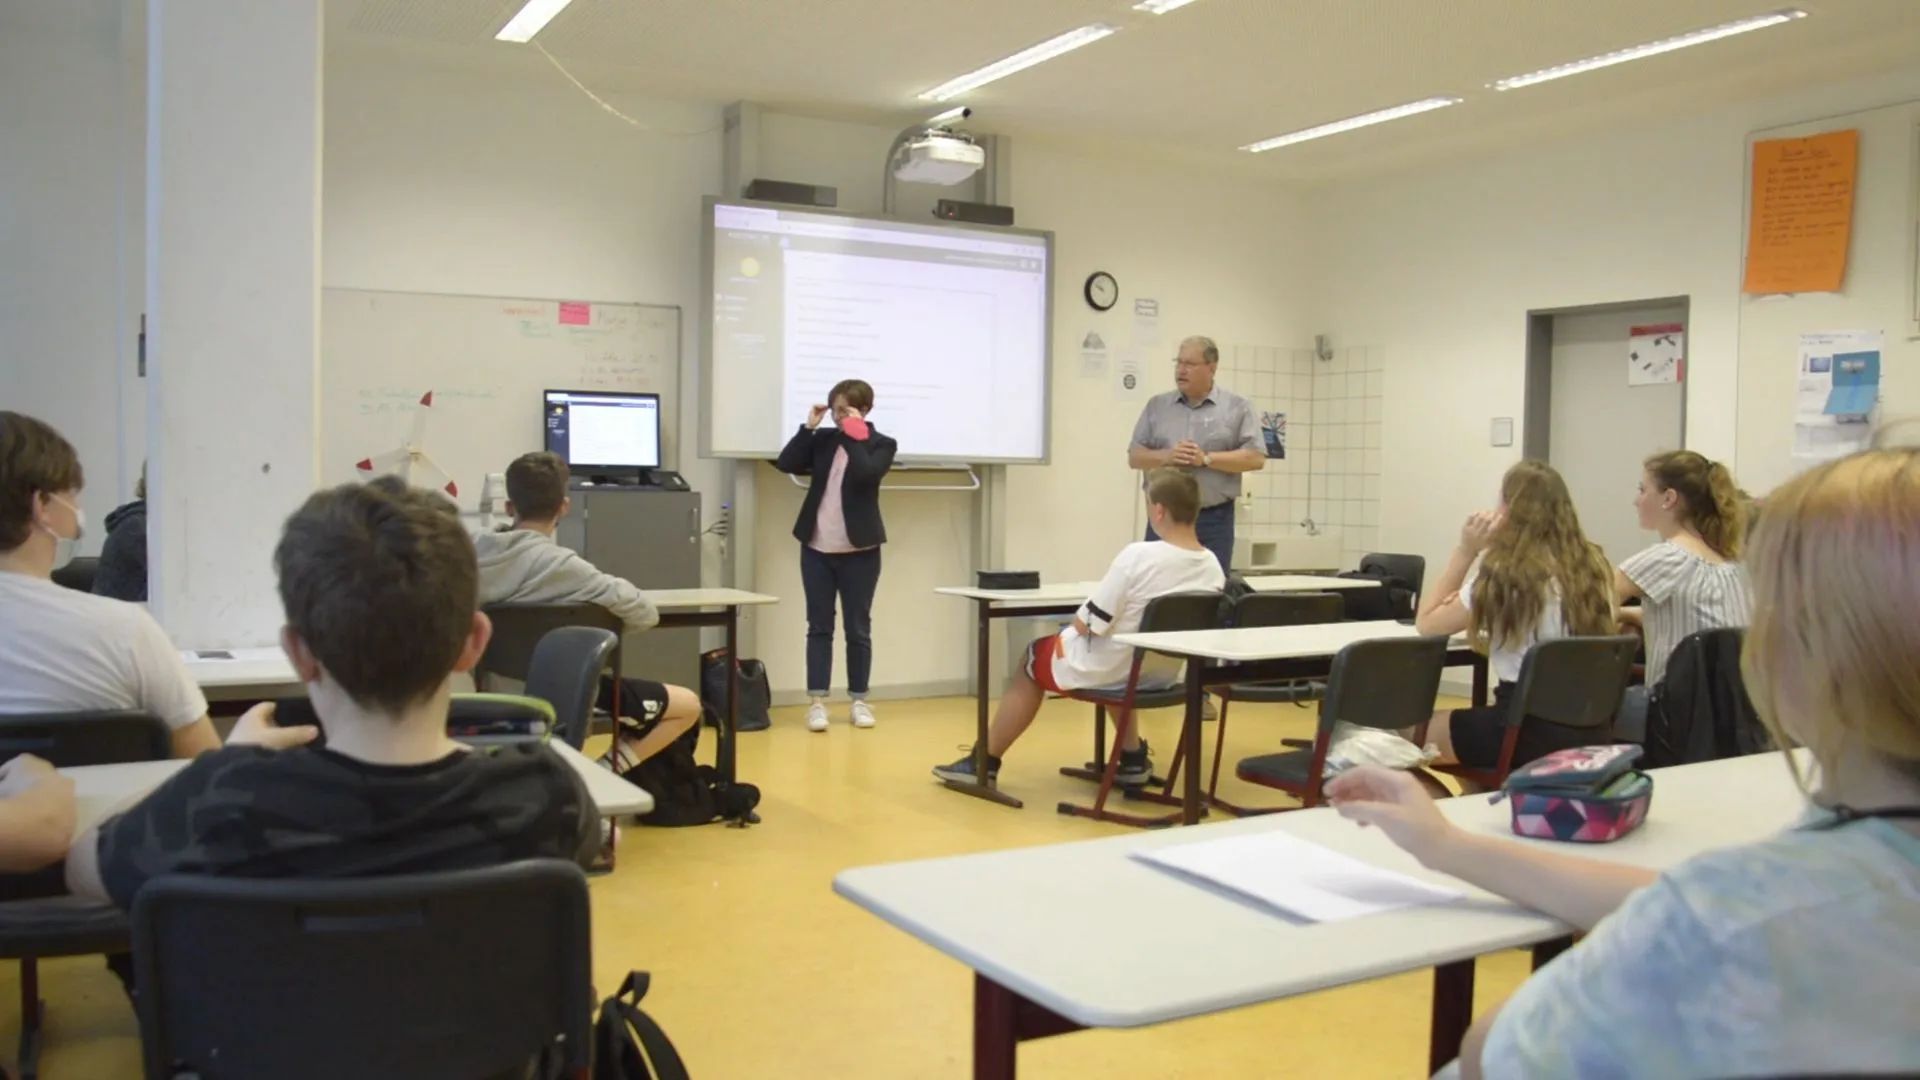 Class! classes: Liebfrauenschule Nottuln - Topic Select